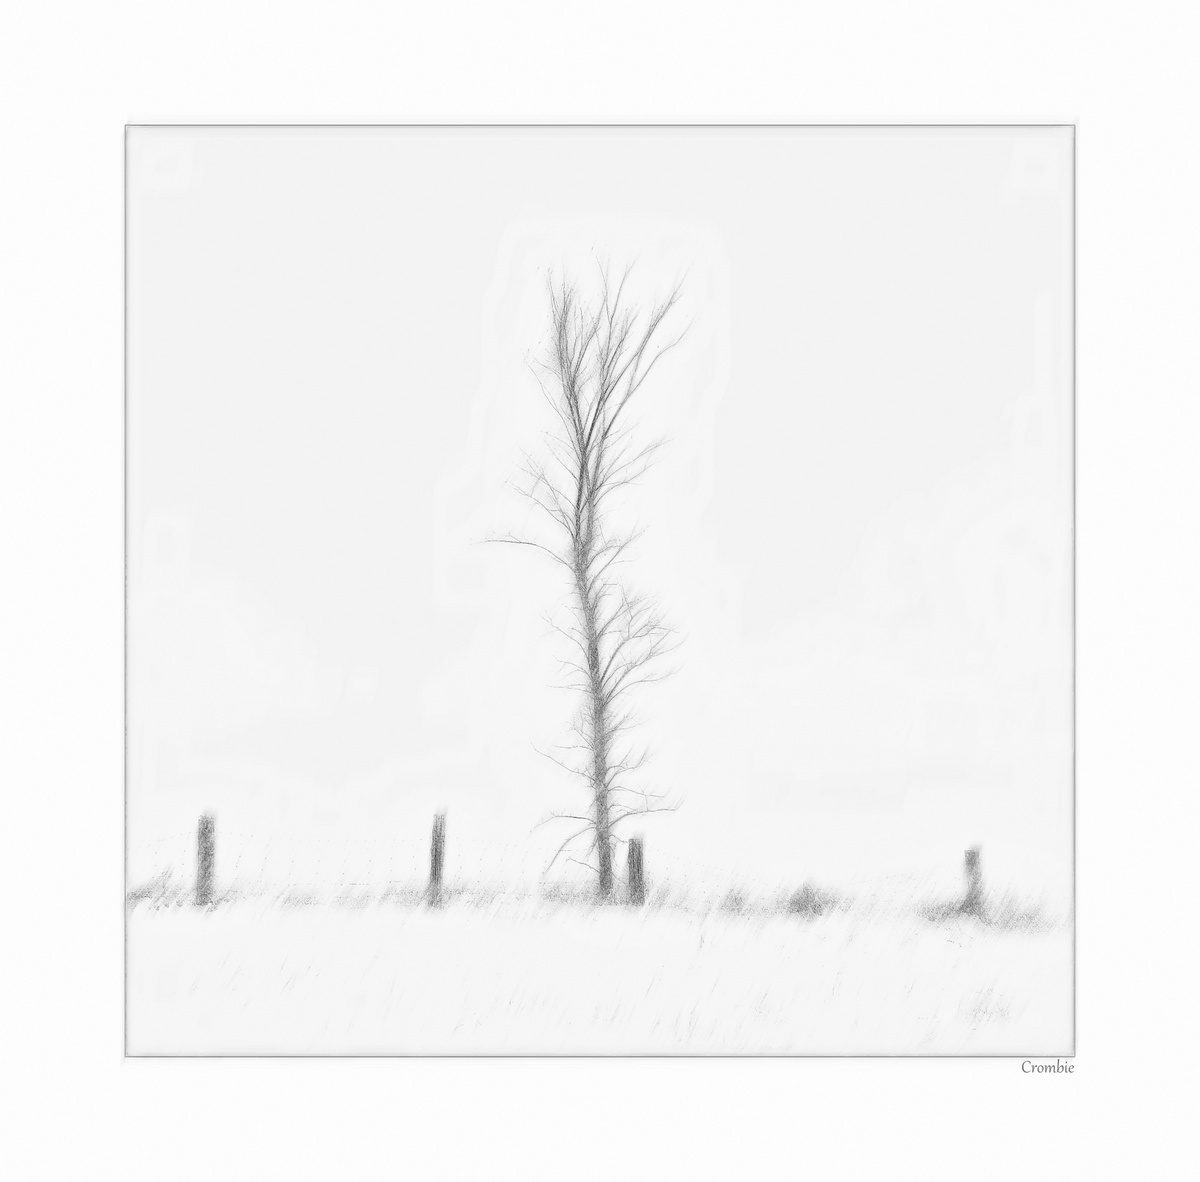 1. Winter landscape, 250 f6.3 at 1/250 f11